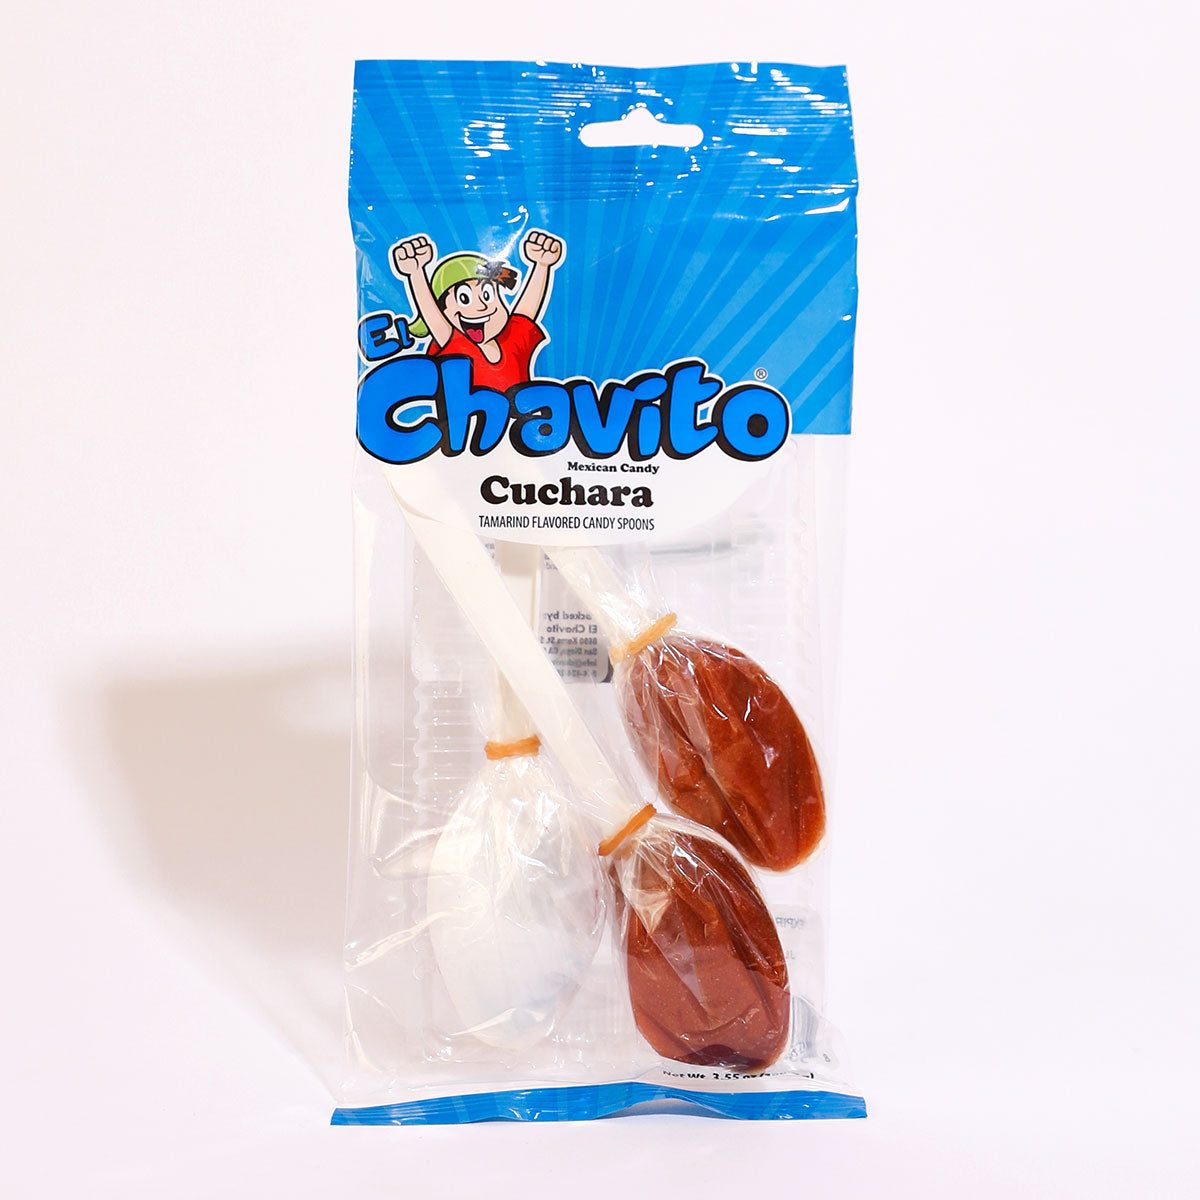 El Chavito: Cuchara